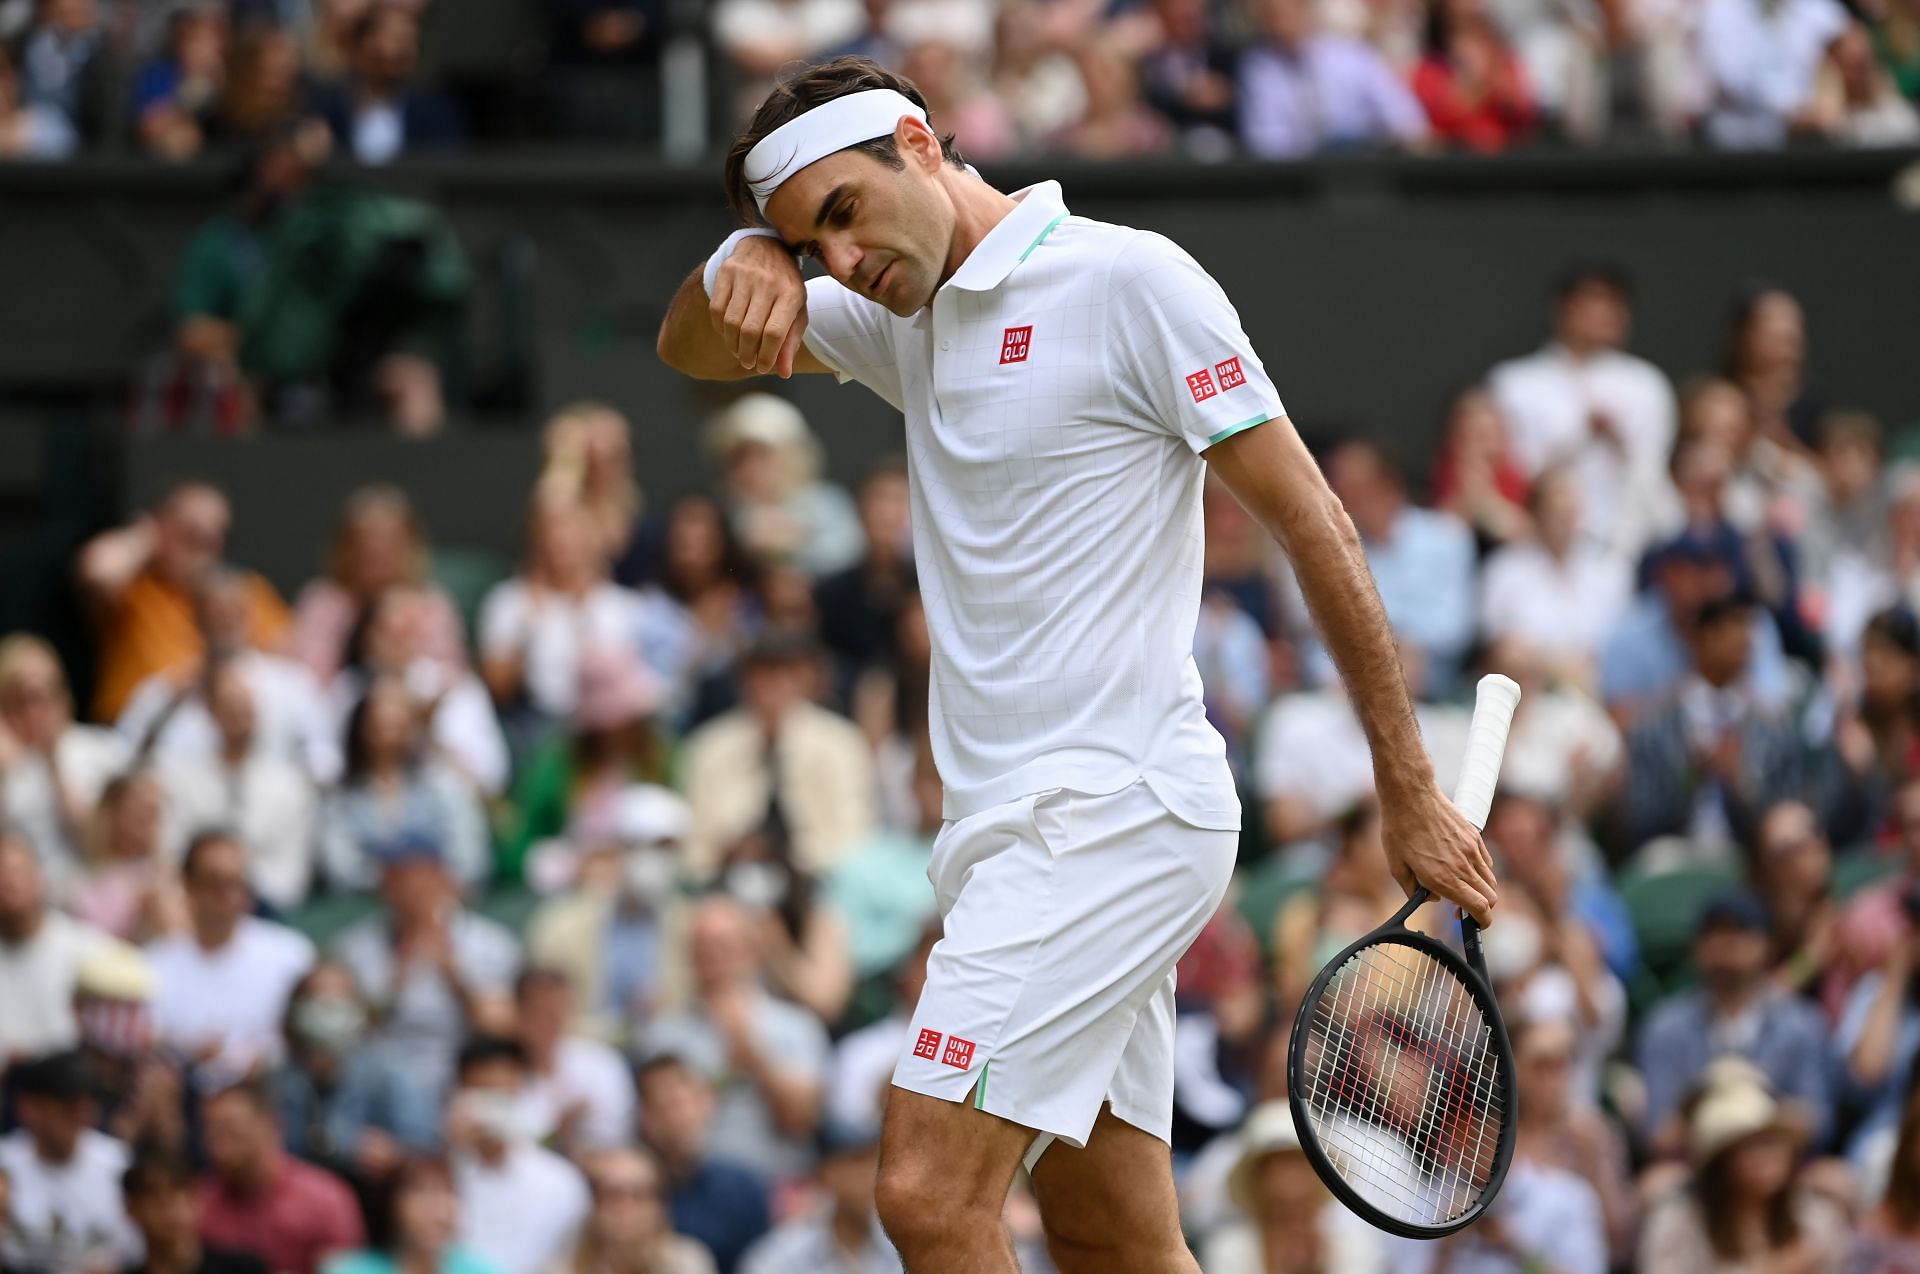 Roger Federer at The Championships - Wimbledon 2021